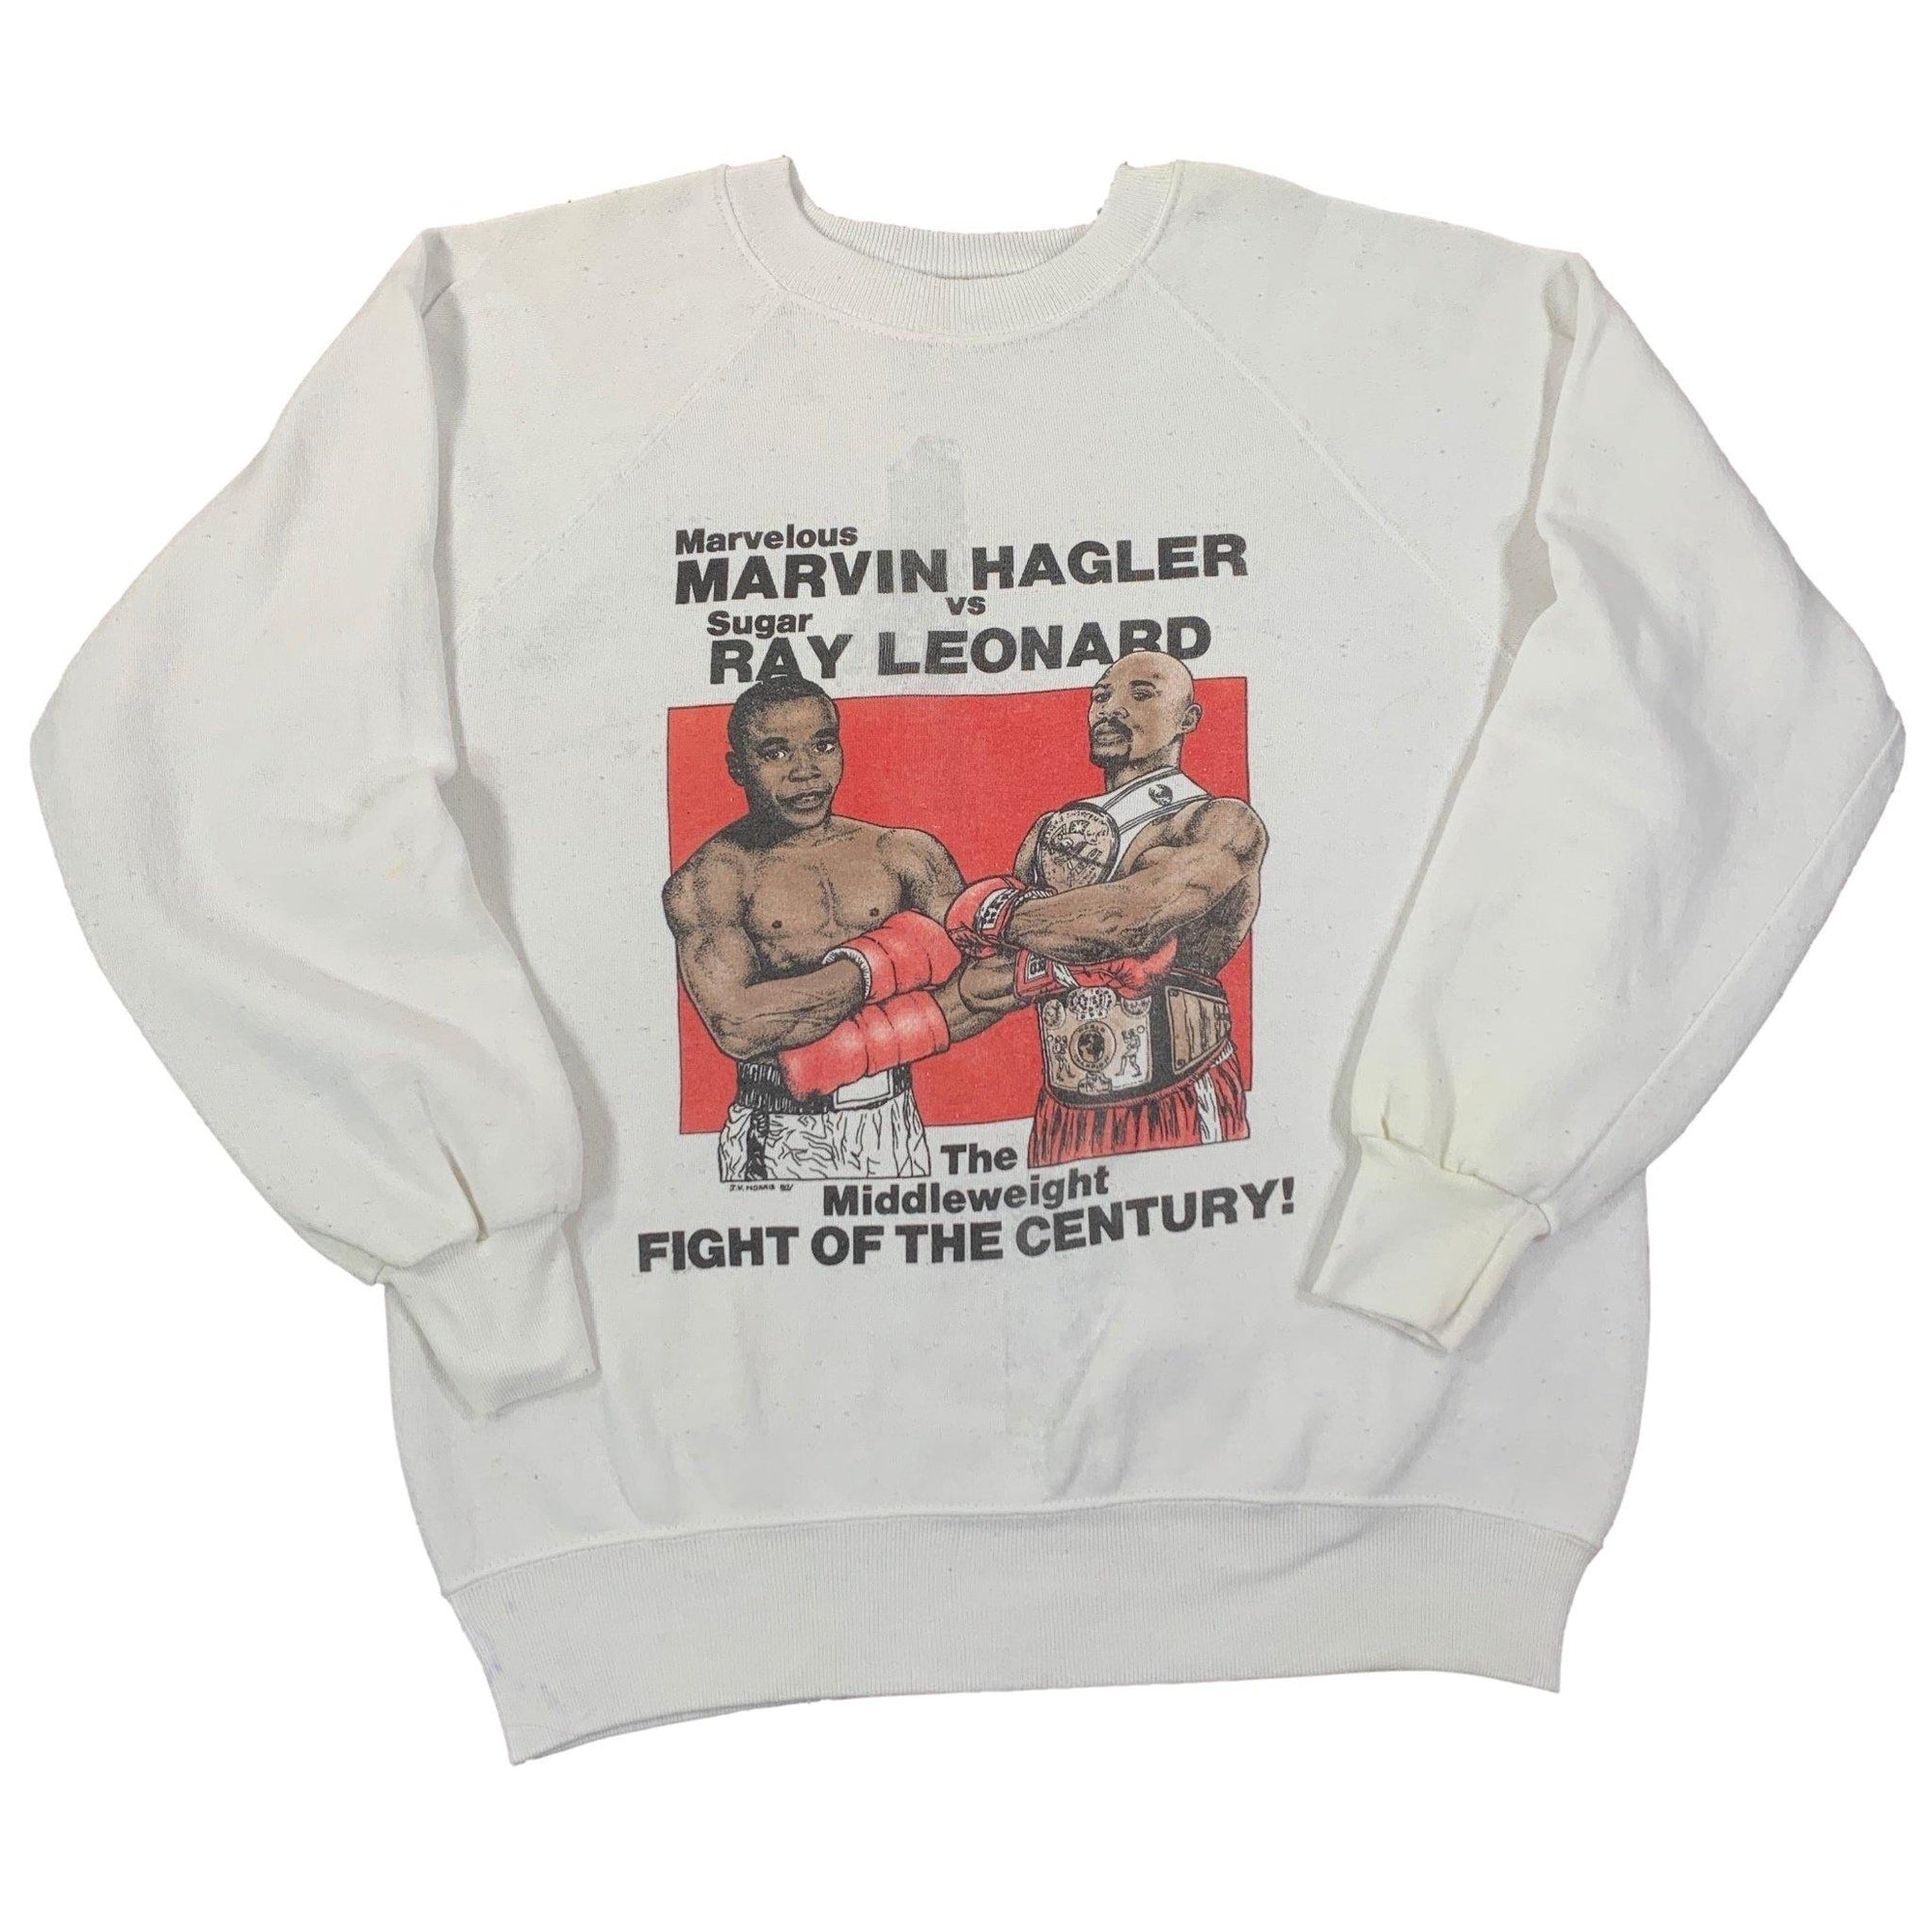 Vintage Ray Leonard VS Marvin Hagler "Fight Of The Century!" Crewneck Sweatshirt - jointcustodydc